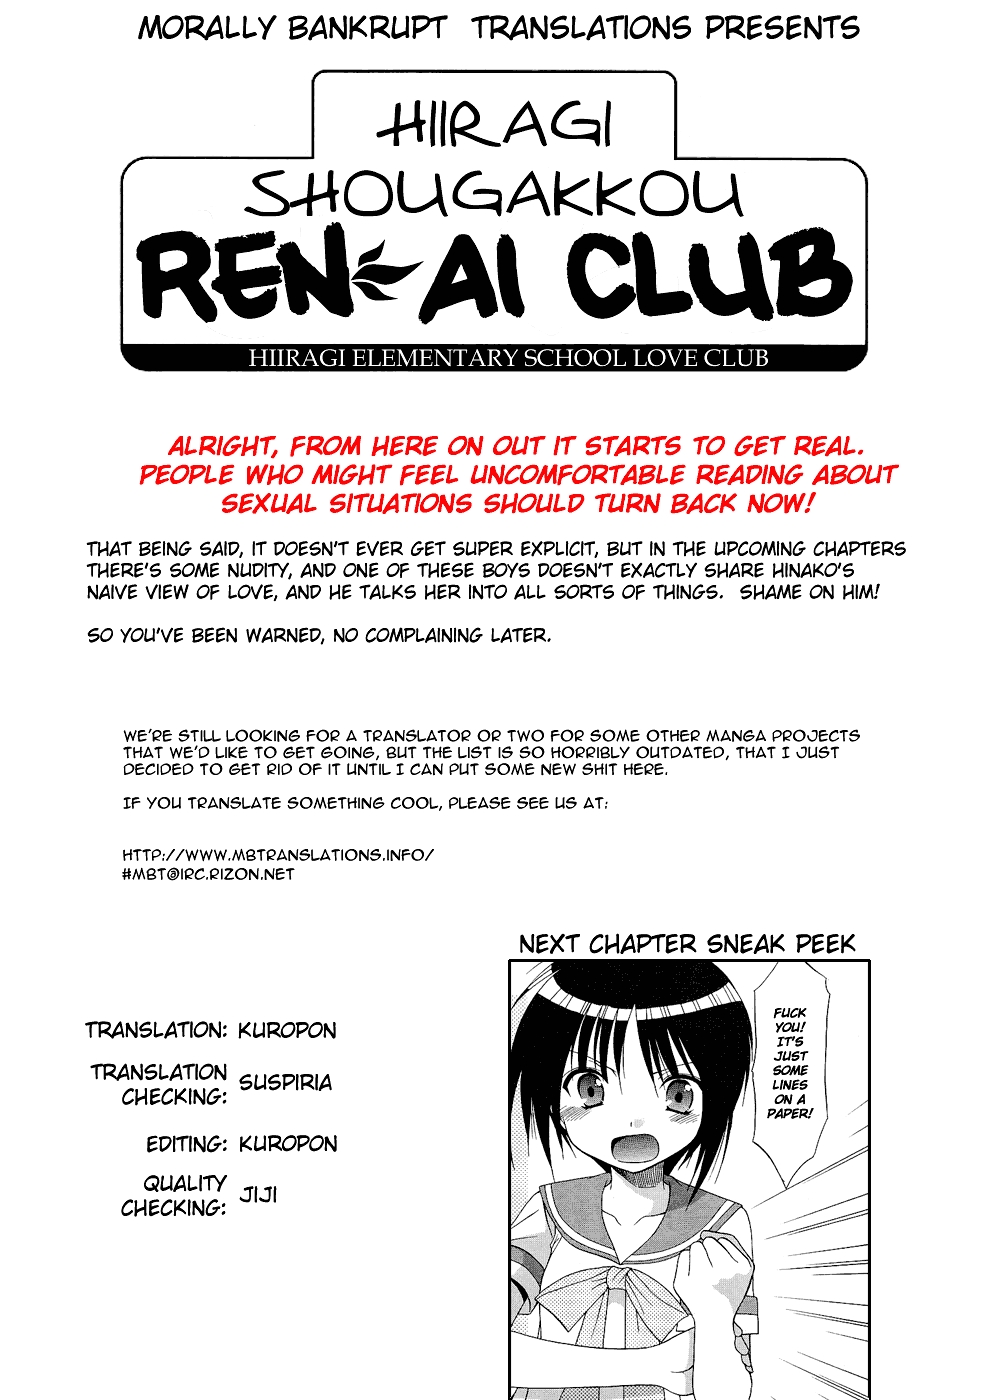 Hiiragi Shougakkou Ren’ai Club Vol. 2 Ch. 11 Competition